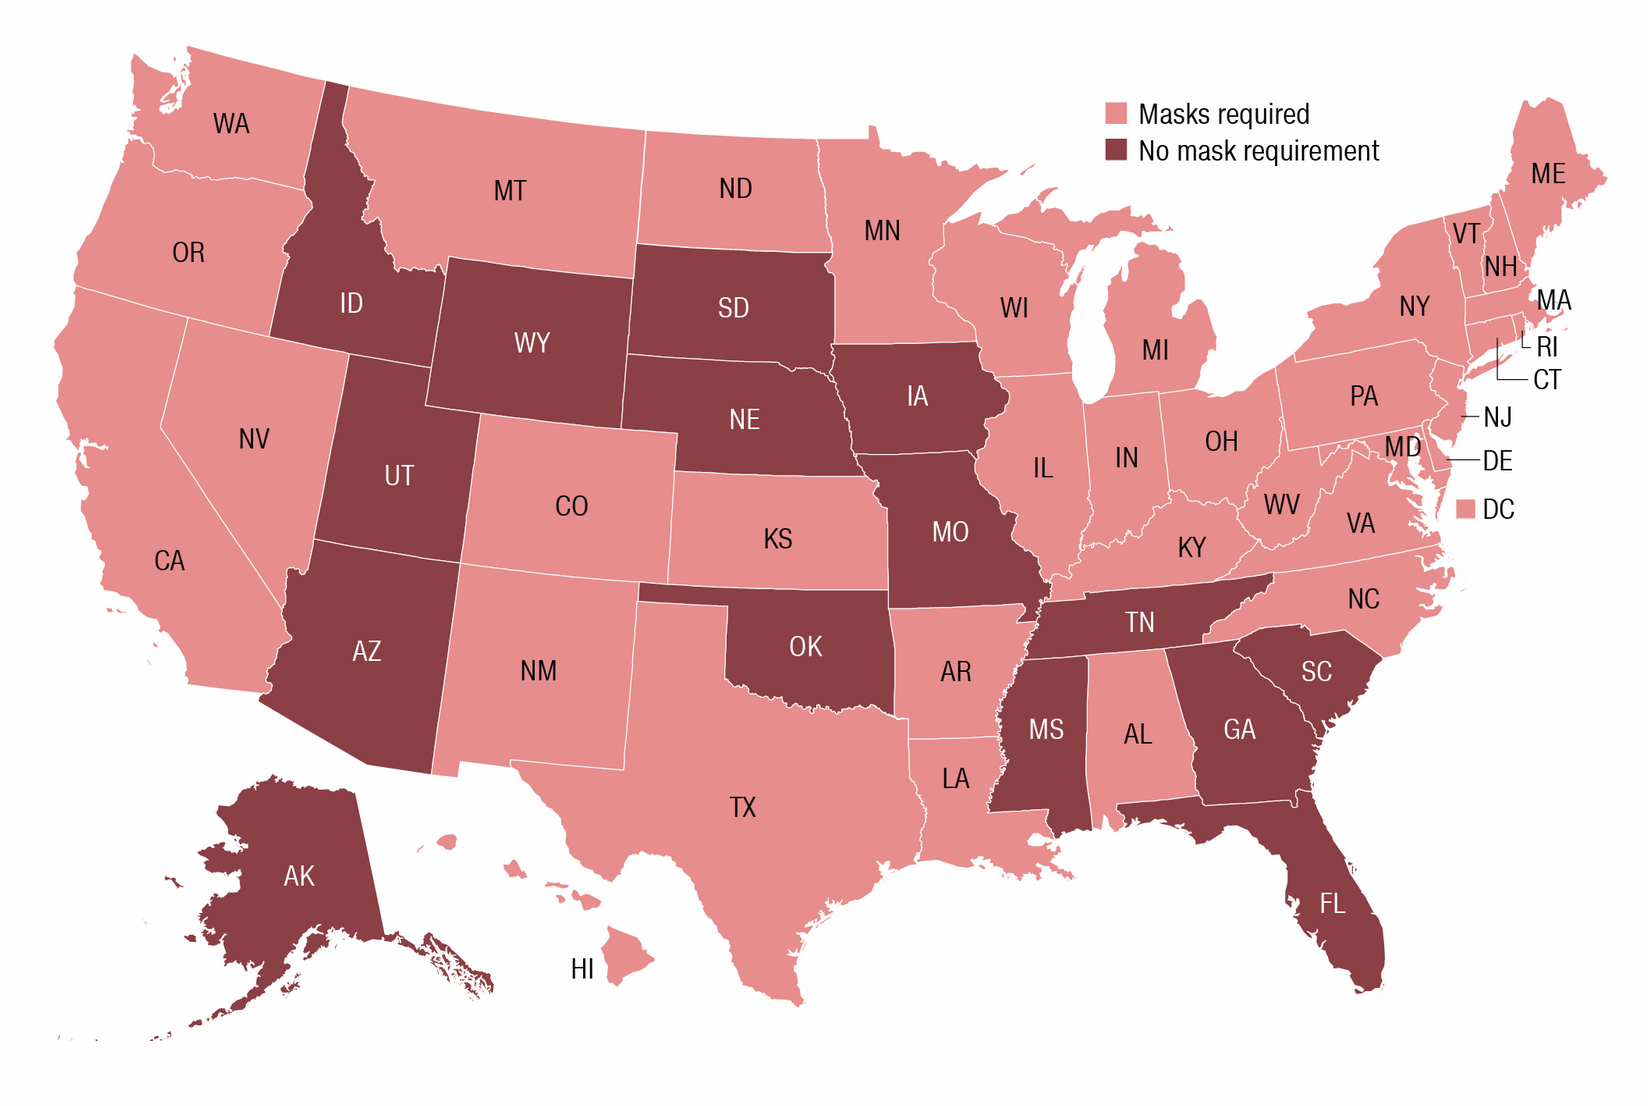 35 states with mask mandates for November 16, 2020